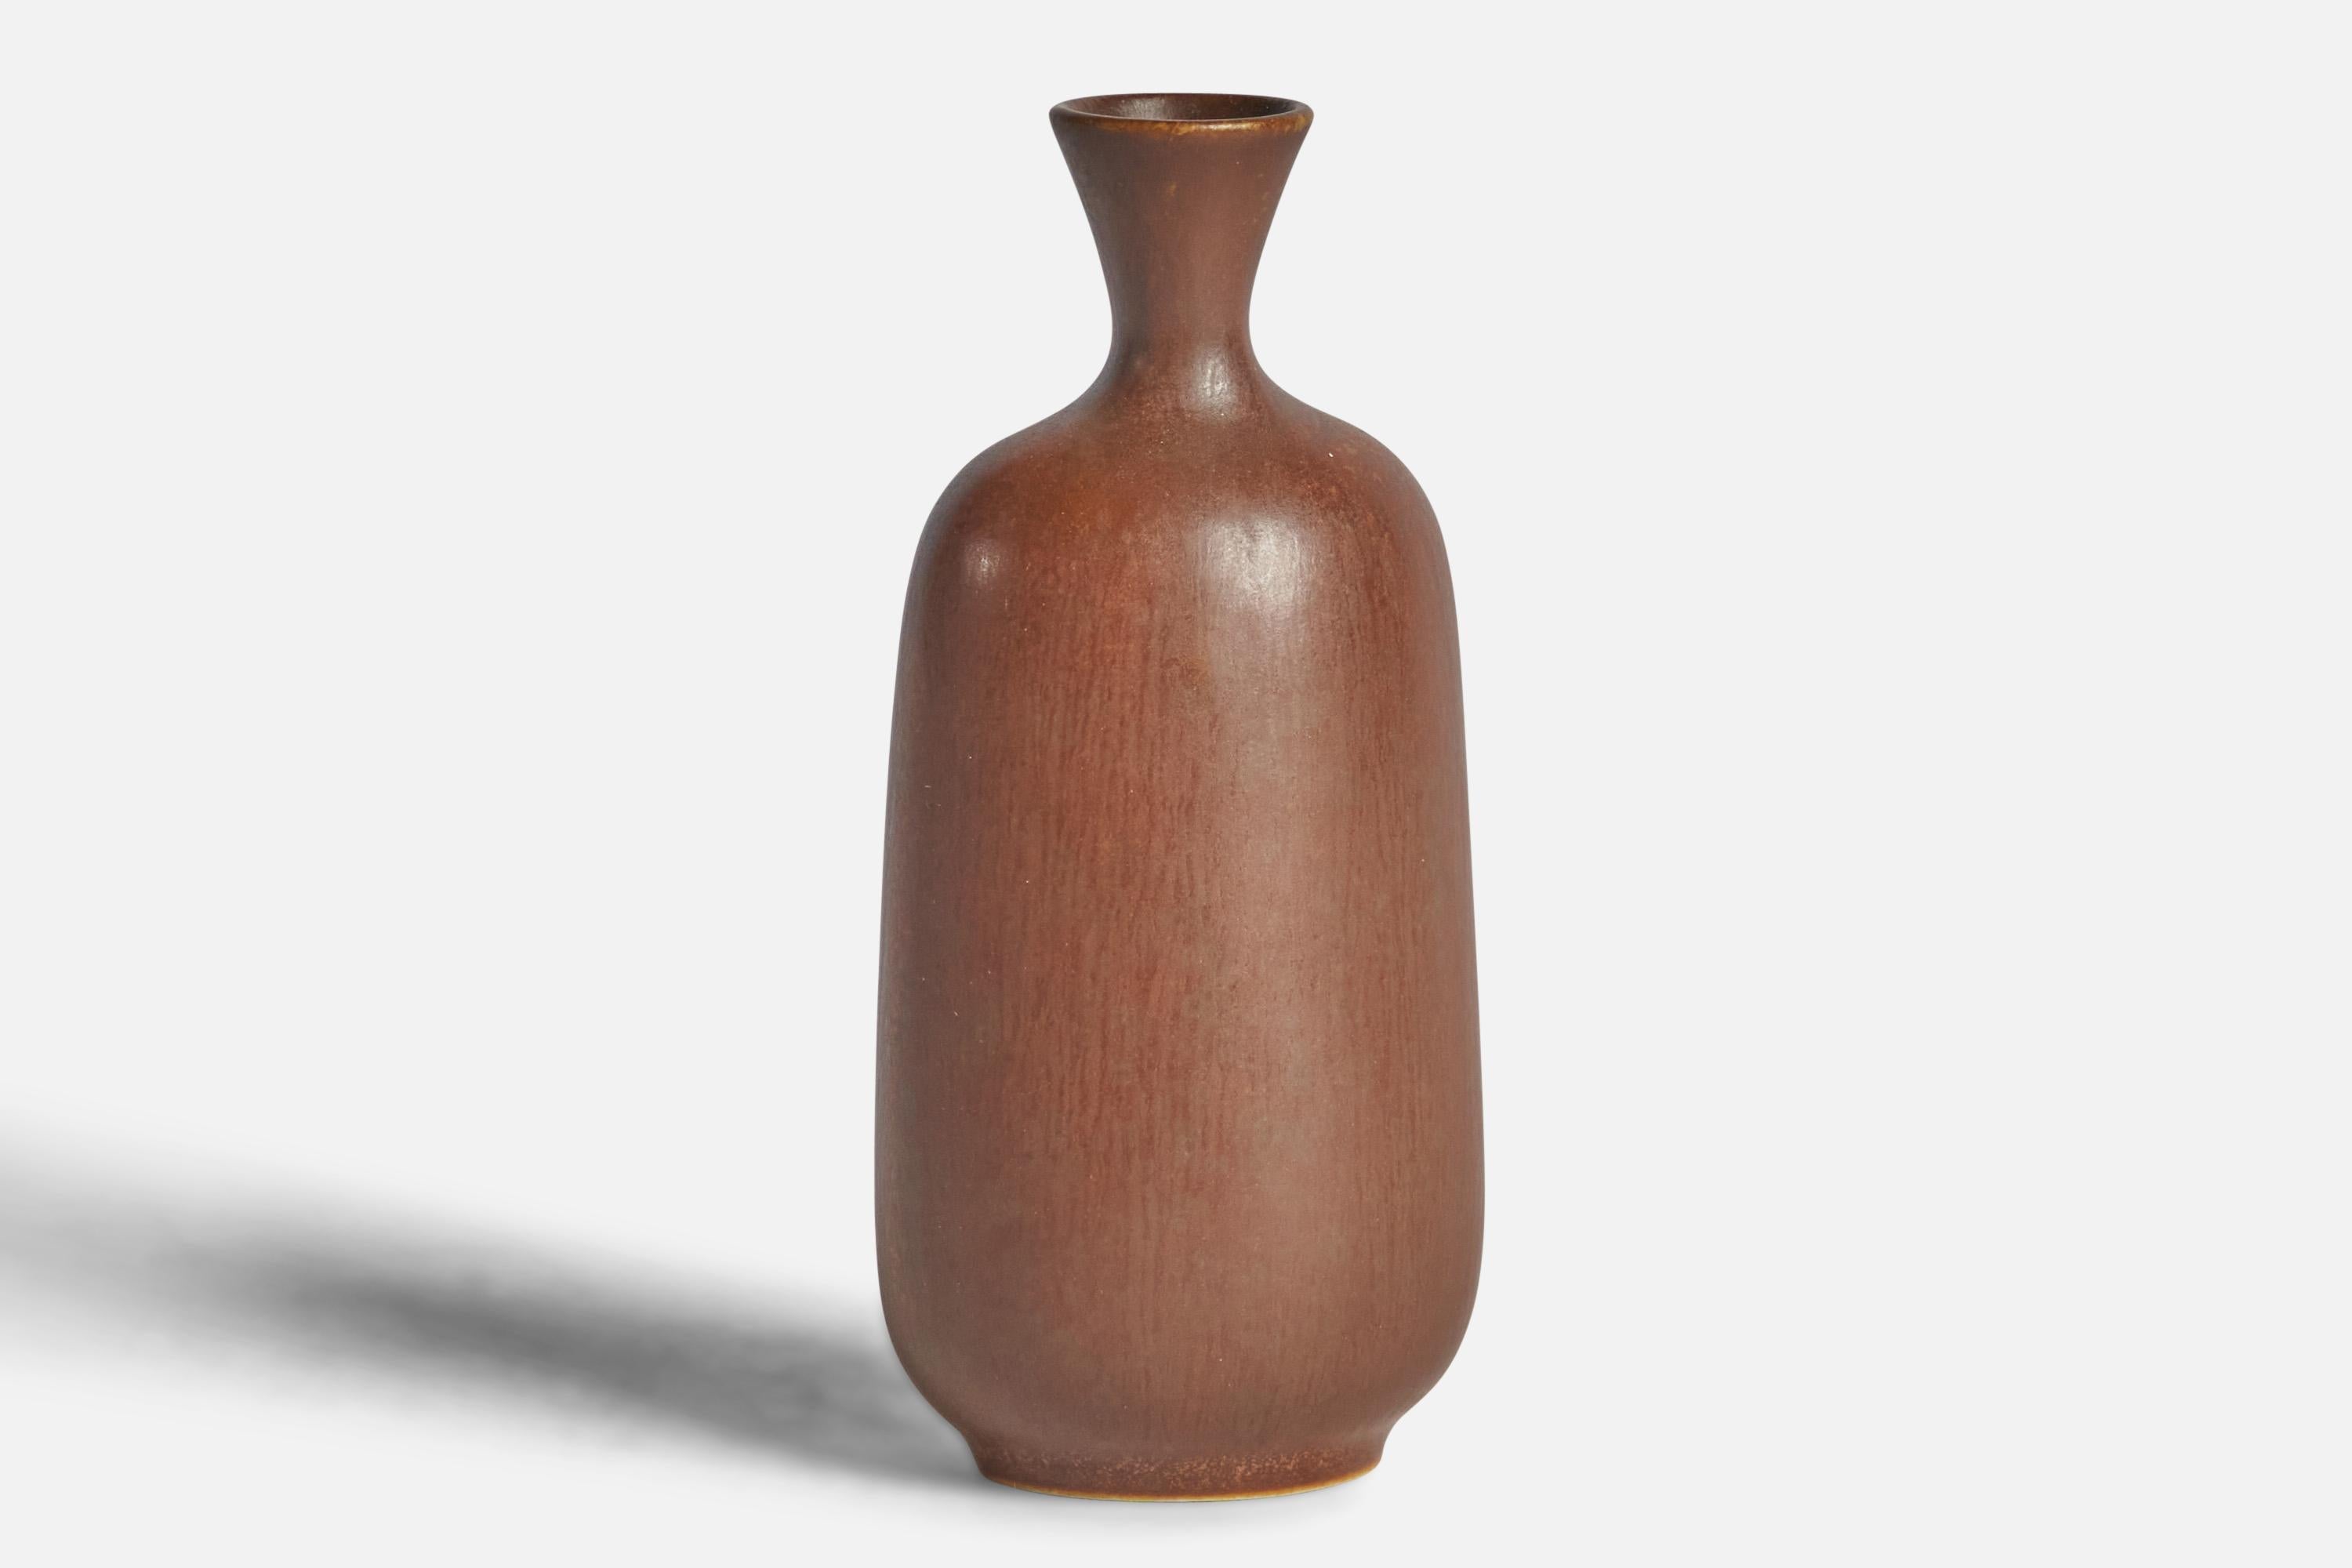 A brown-glazed stoneware vase designed by Berndt Friberg and produced by Rörstrand, Sweden, 1950s.